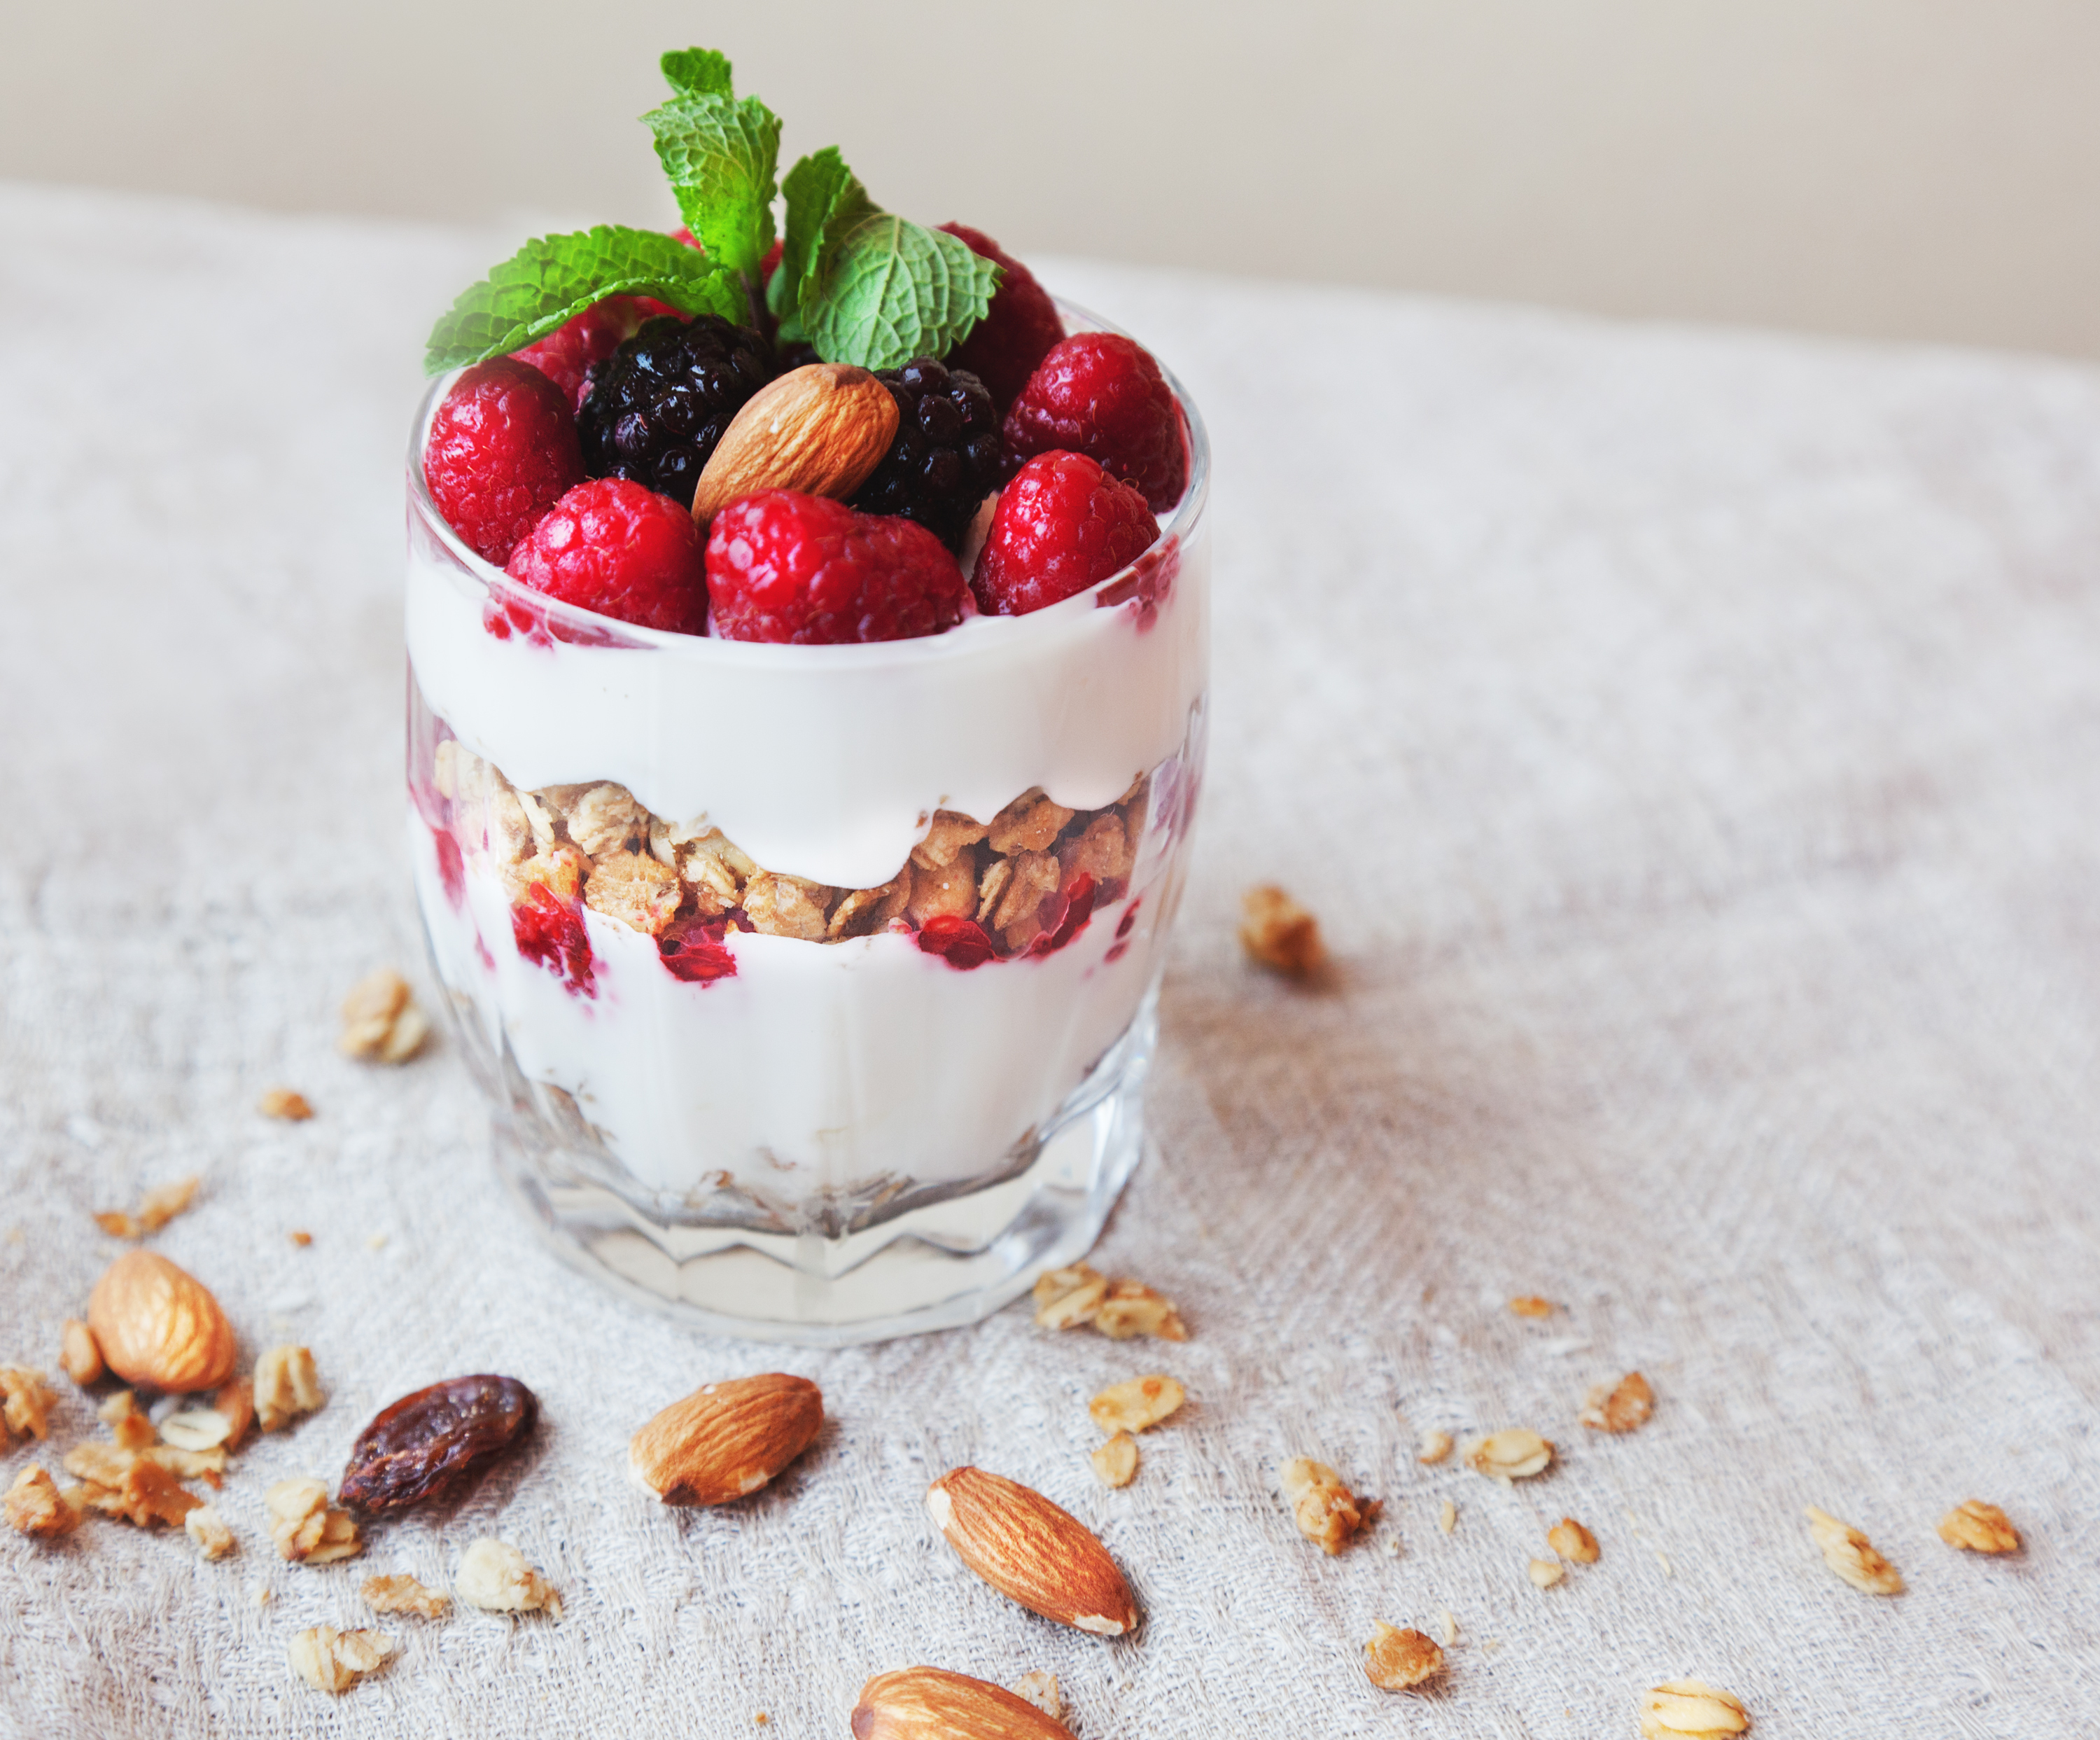 A glass containing yogurt, granola, raspberries, and blueberries.